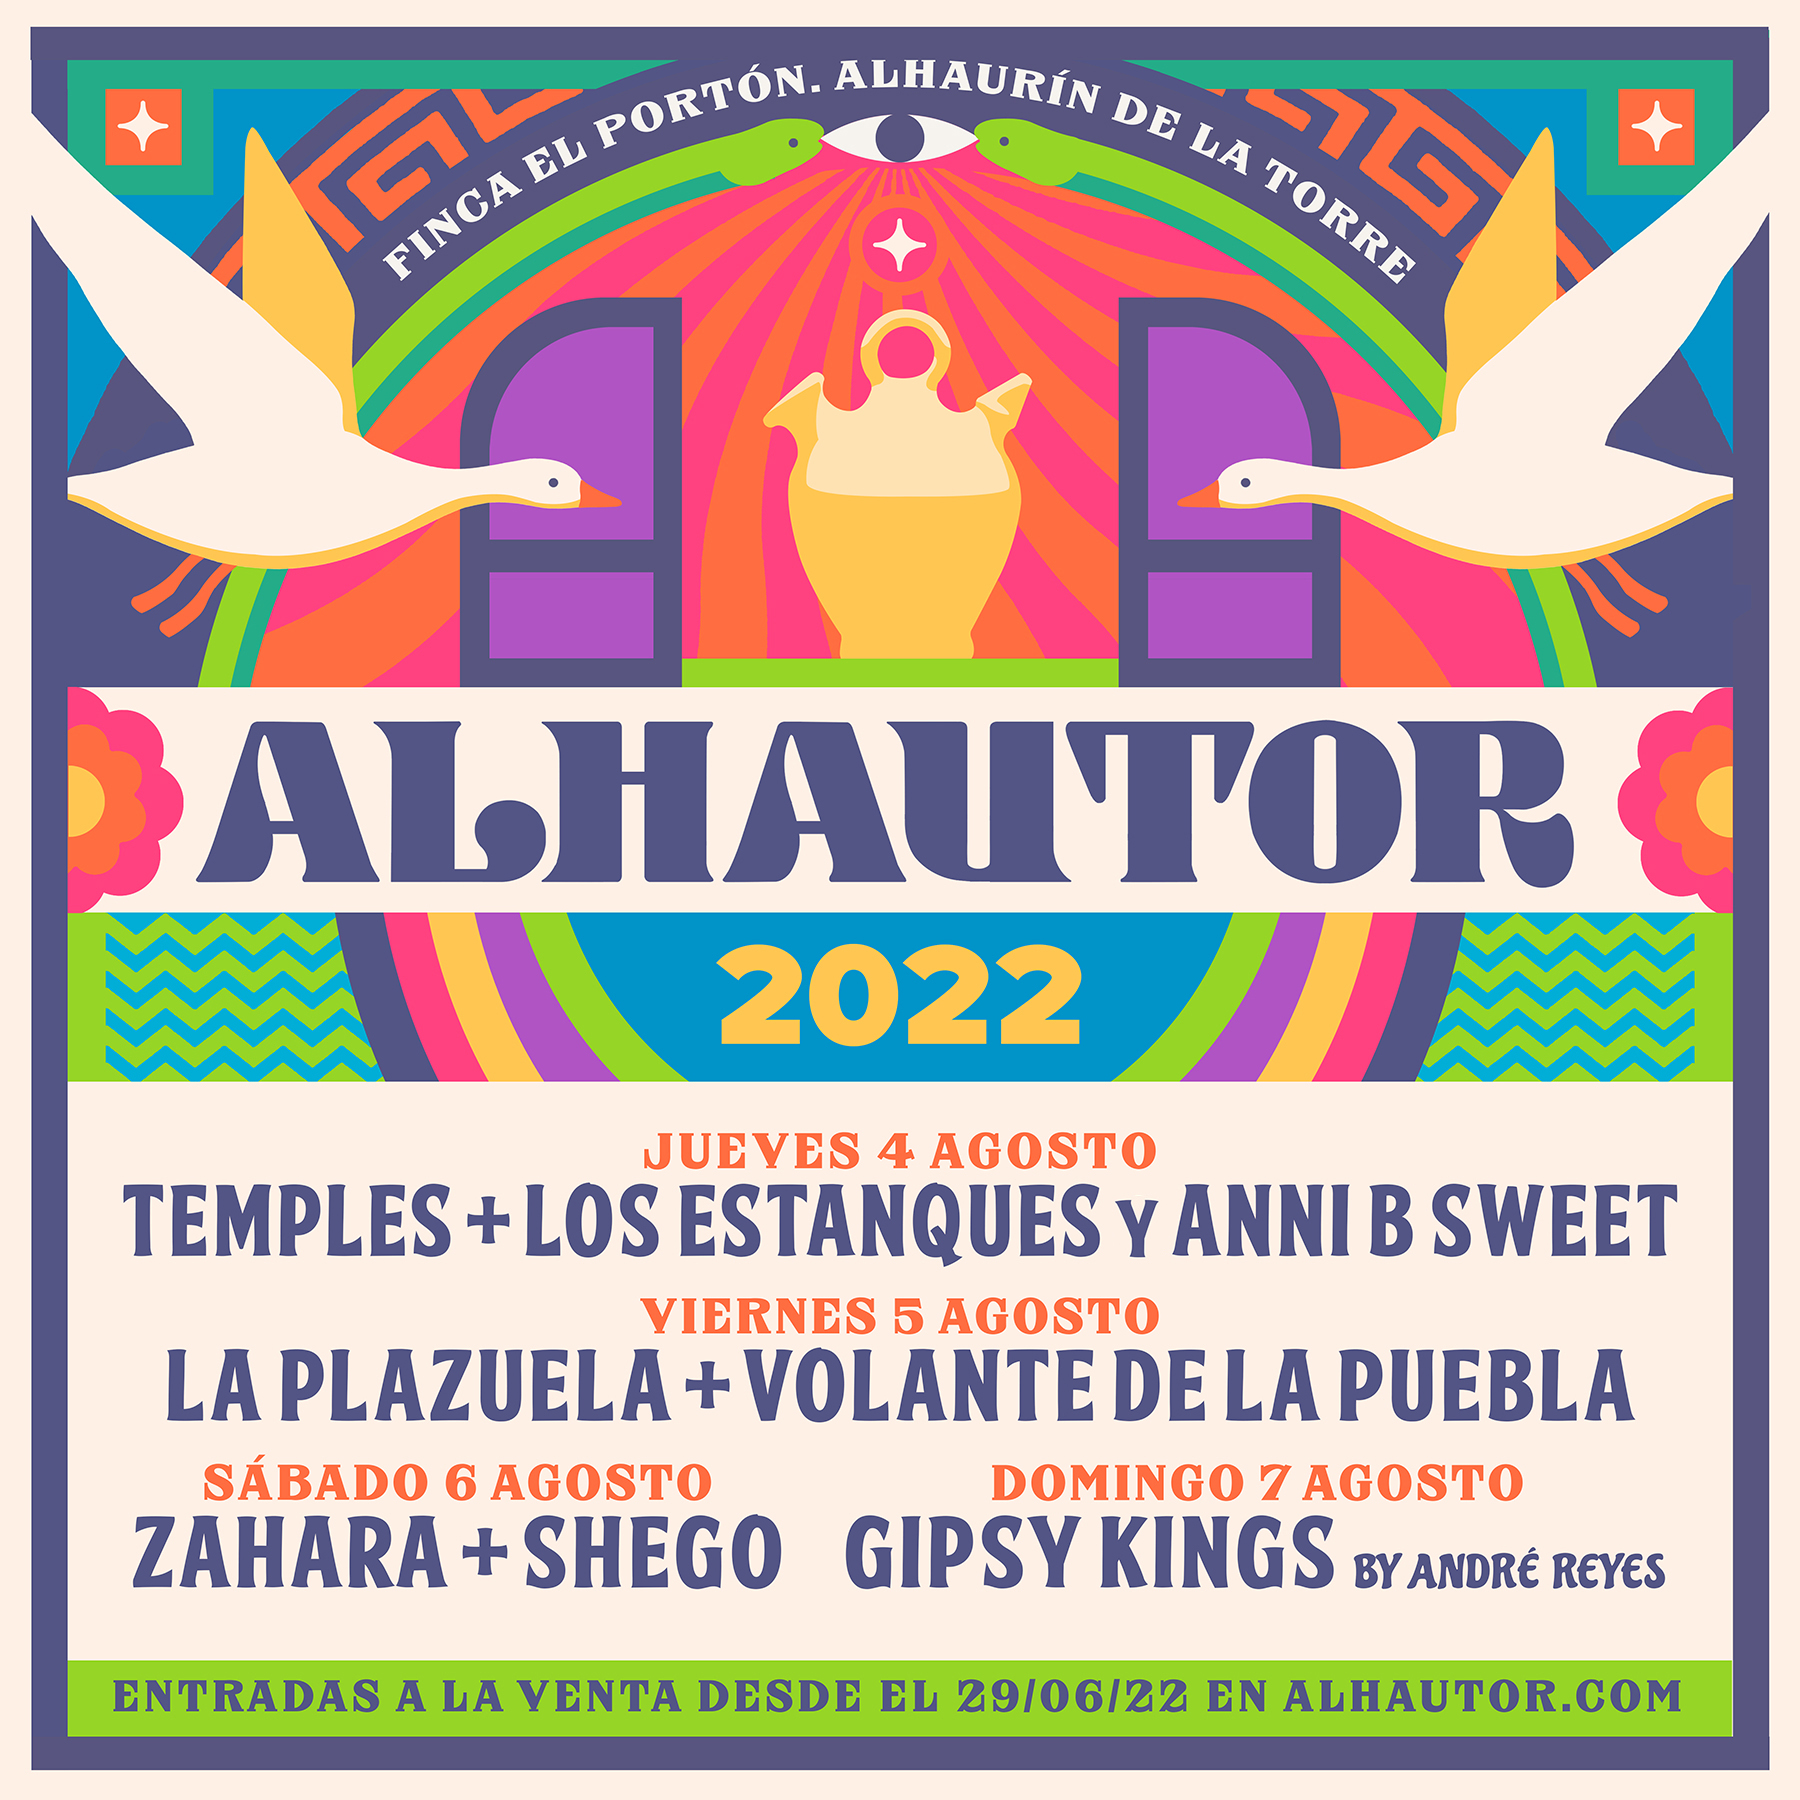 Alhautor 2022